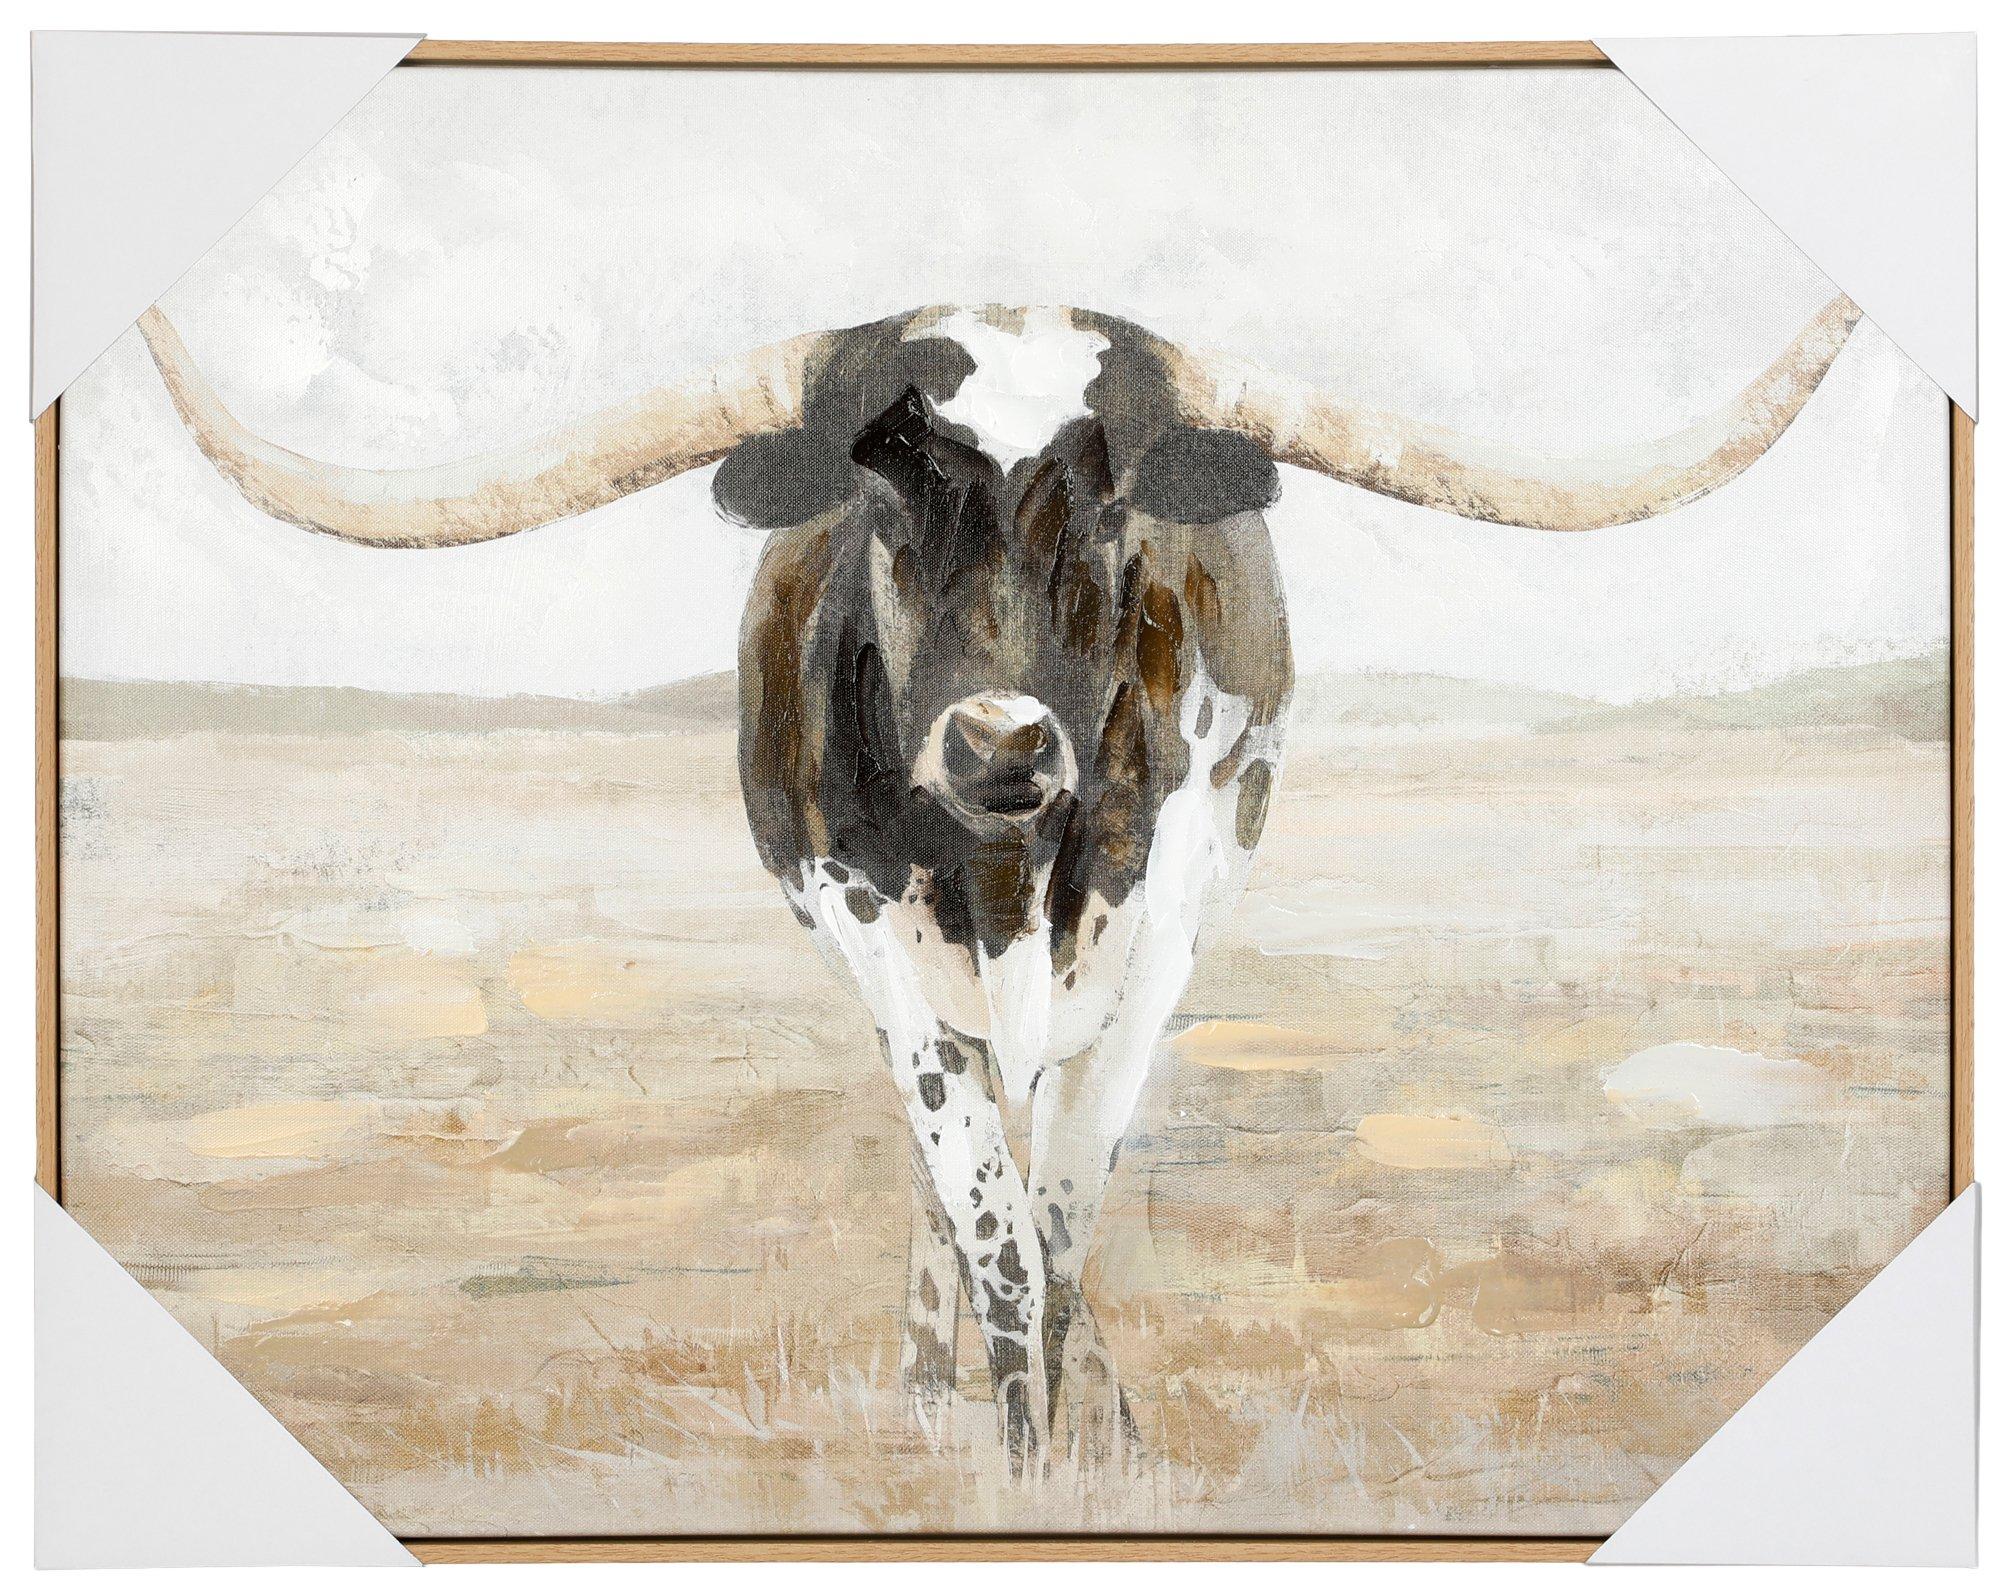 28x22 Longhorn Cow Wall Art